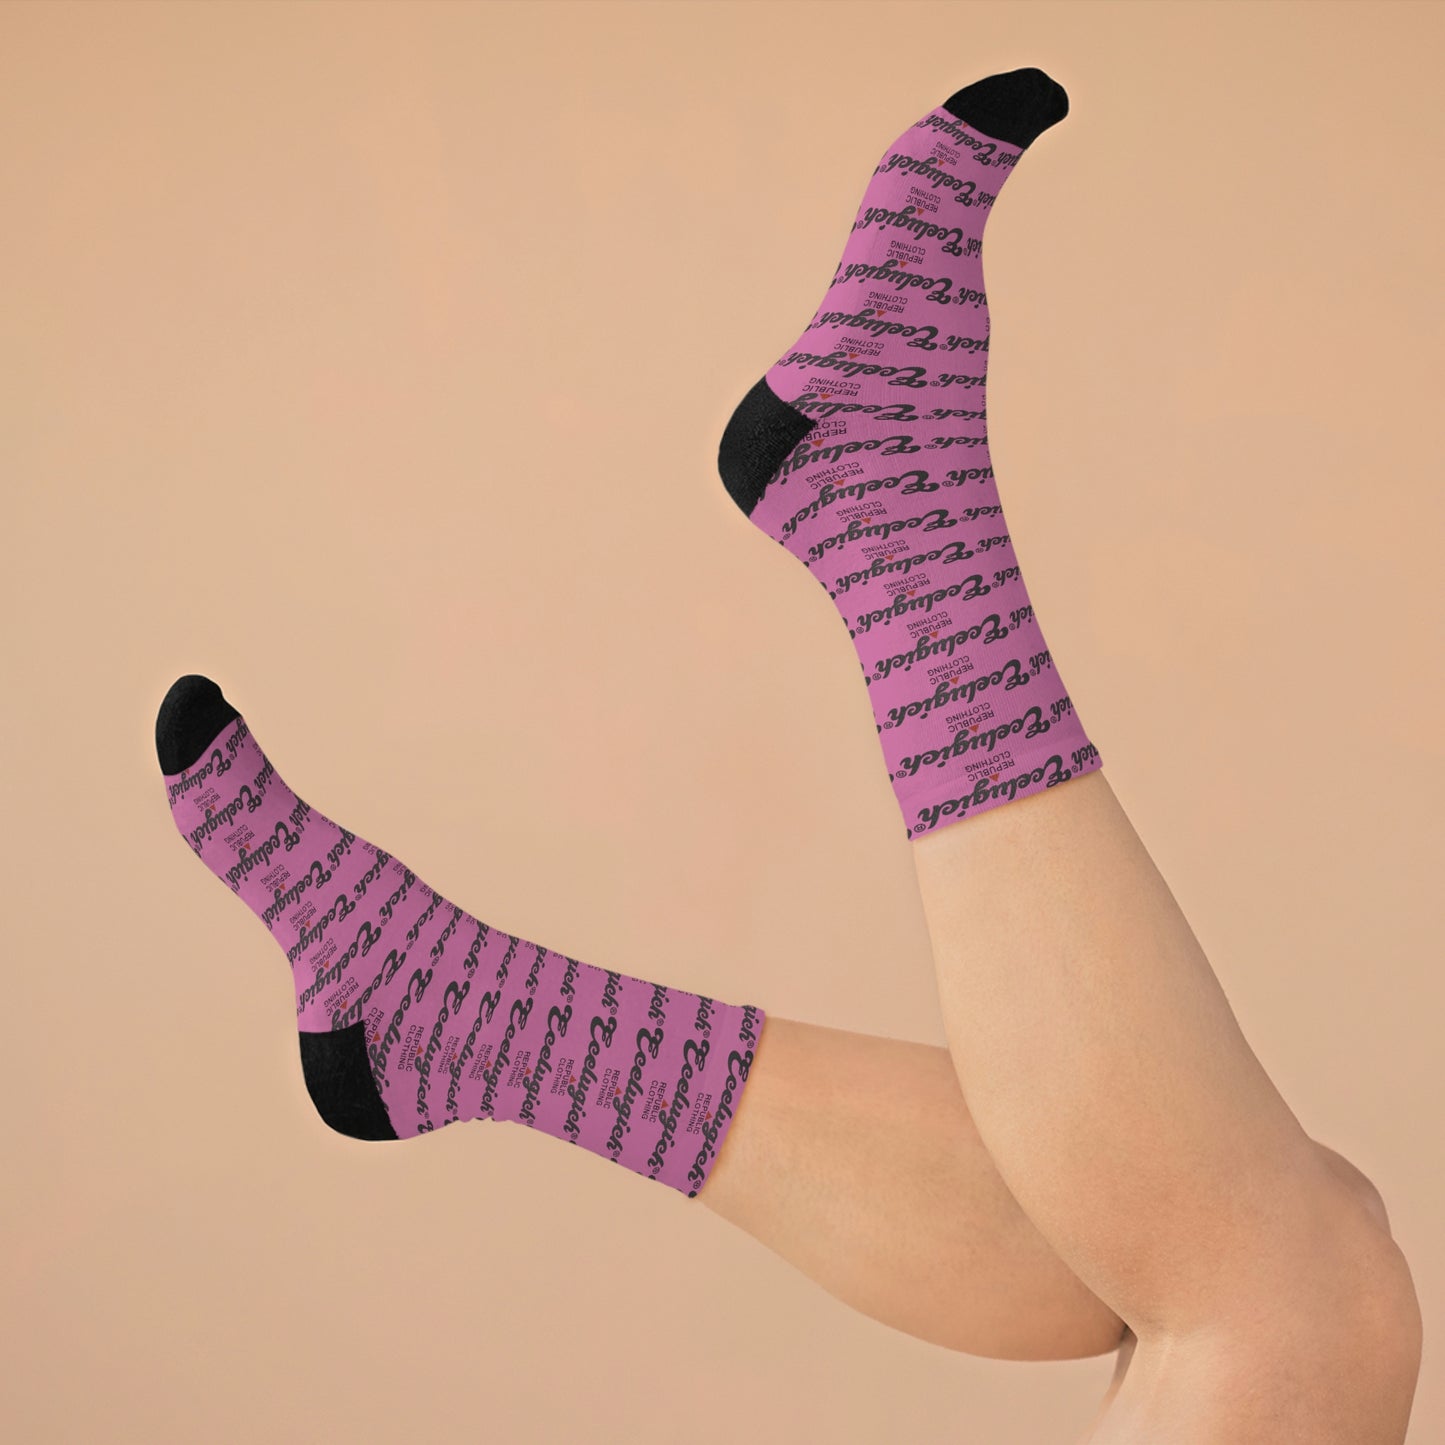 Ecelugich Socks